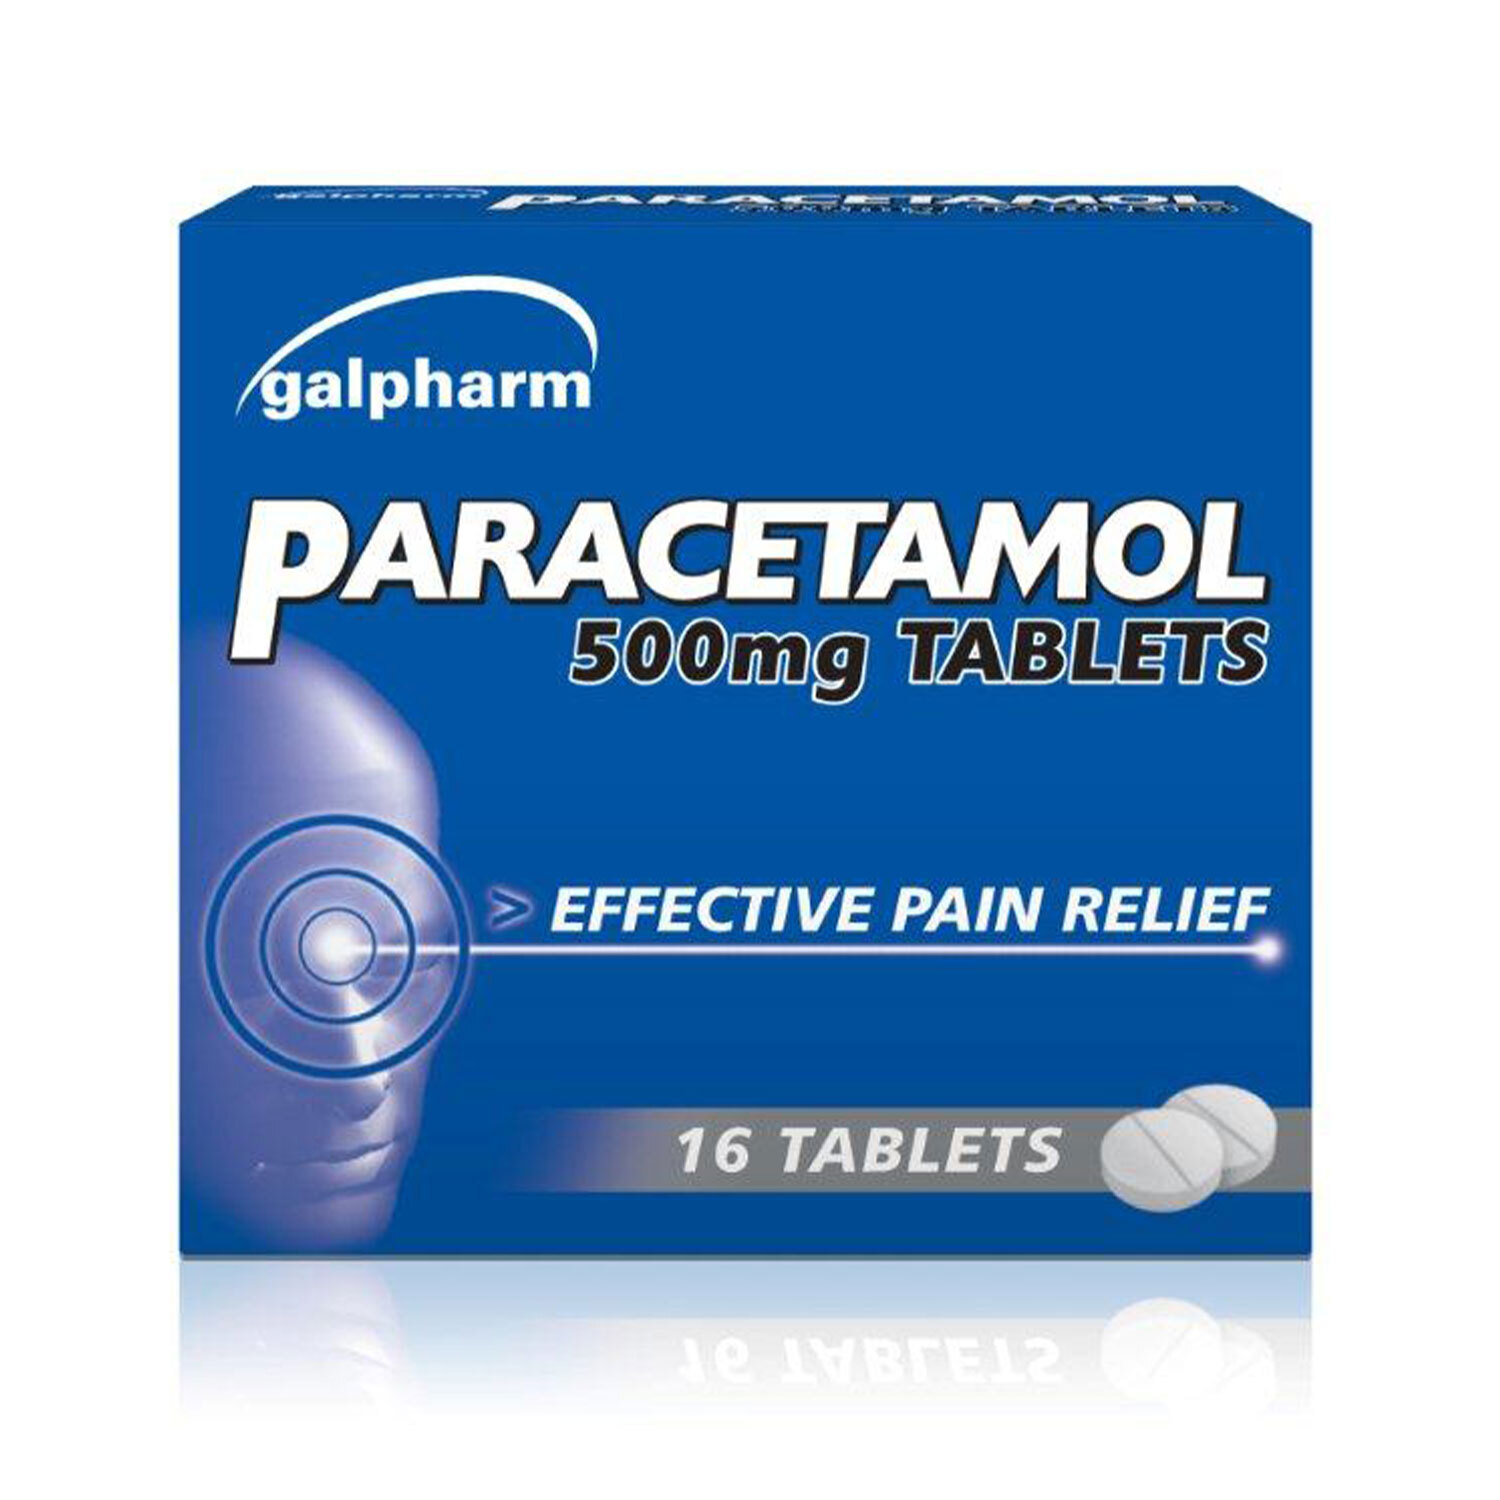 Galpharm Paracetamol 500mg Tablets Image